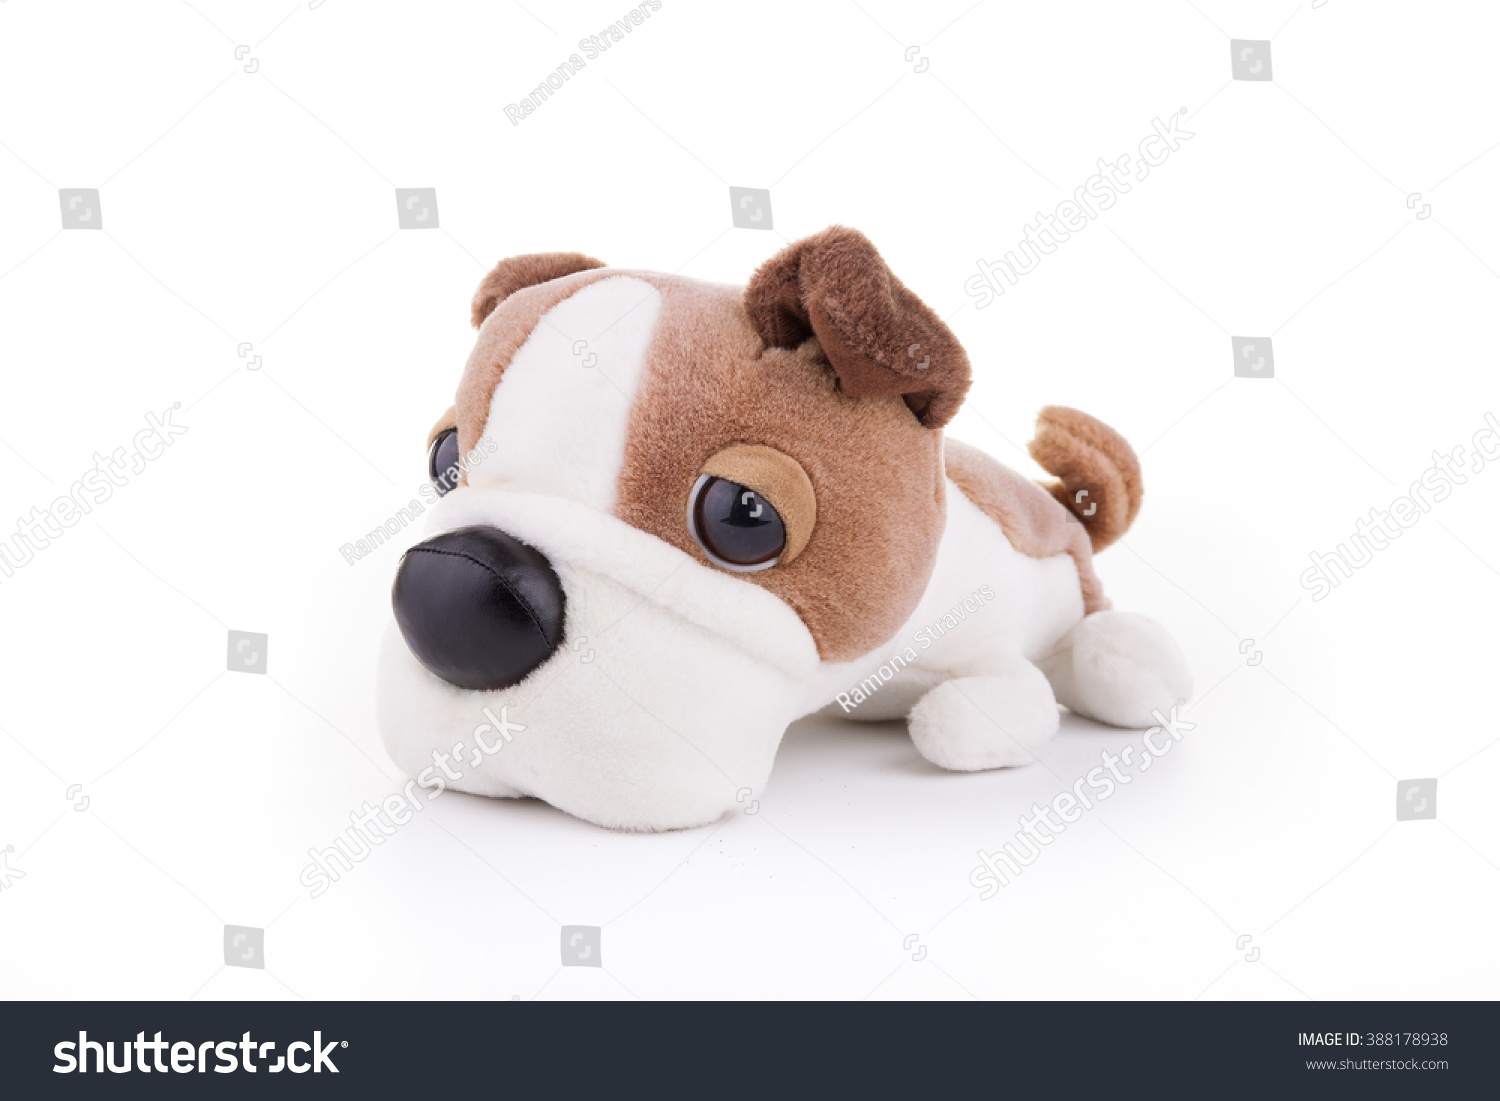 the dog stuffed animal big head